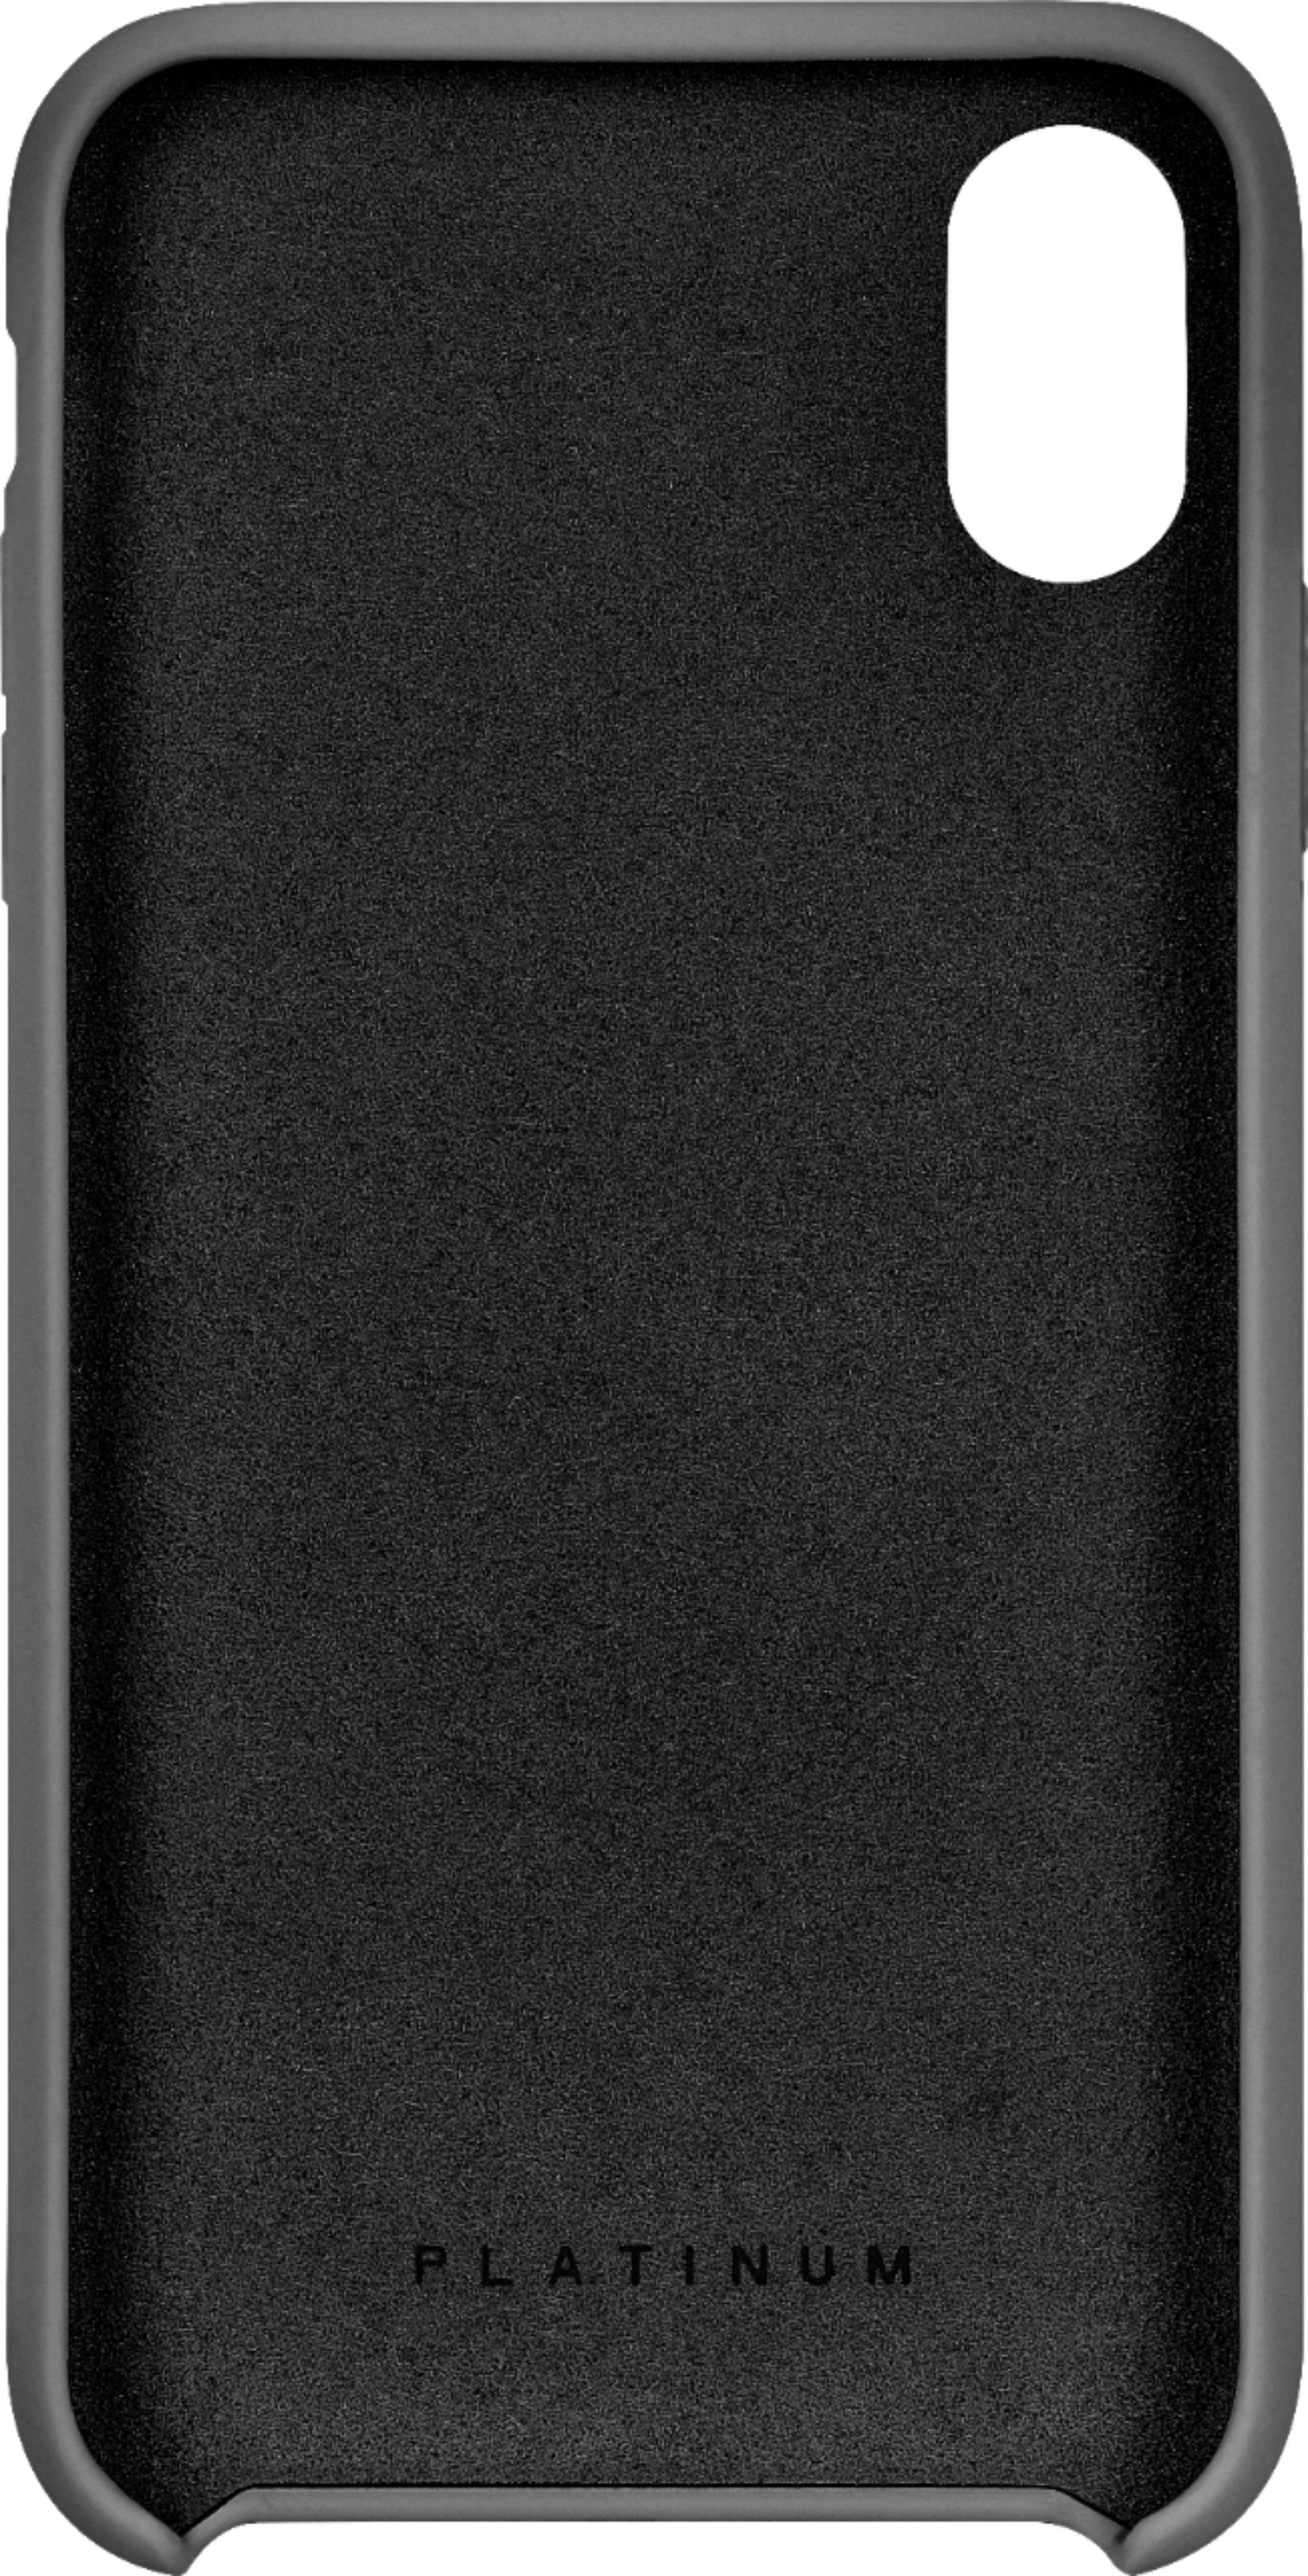 iPhone XS Max Silicone Case - Black - Apple